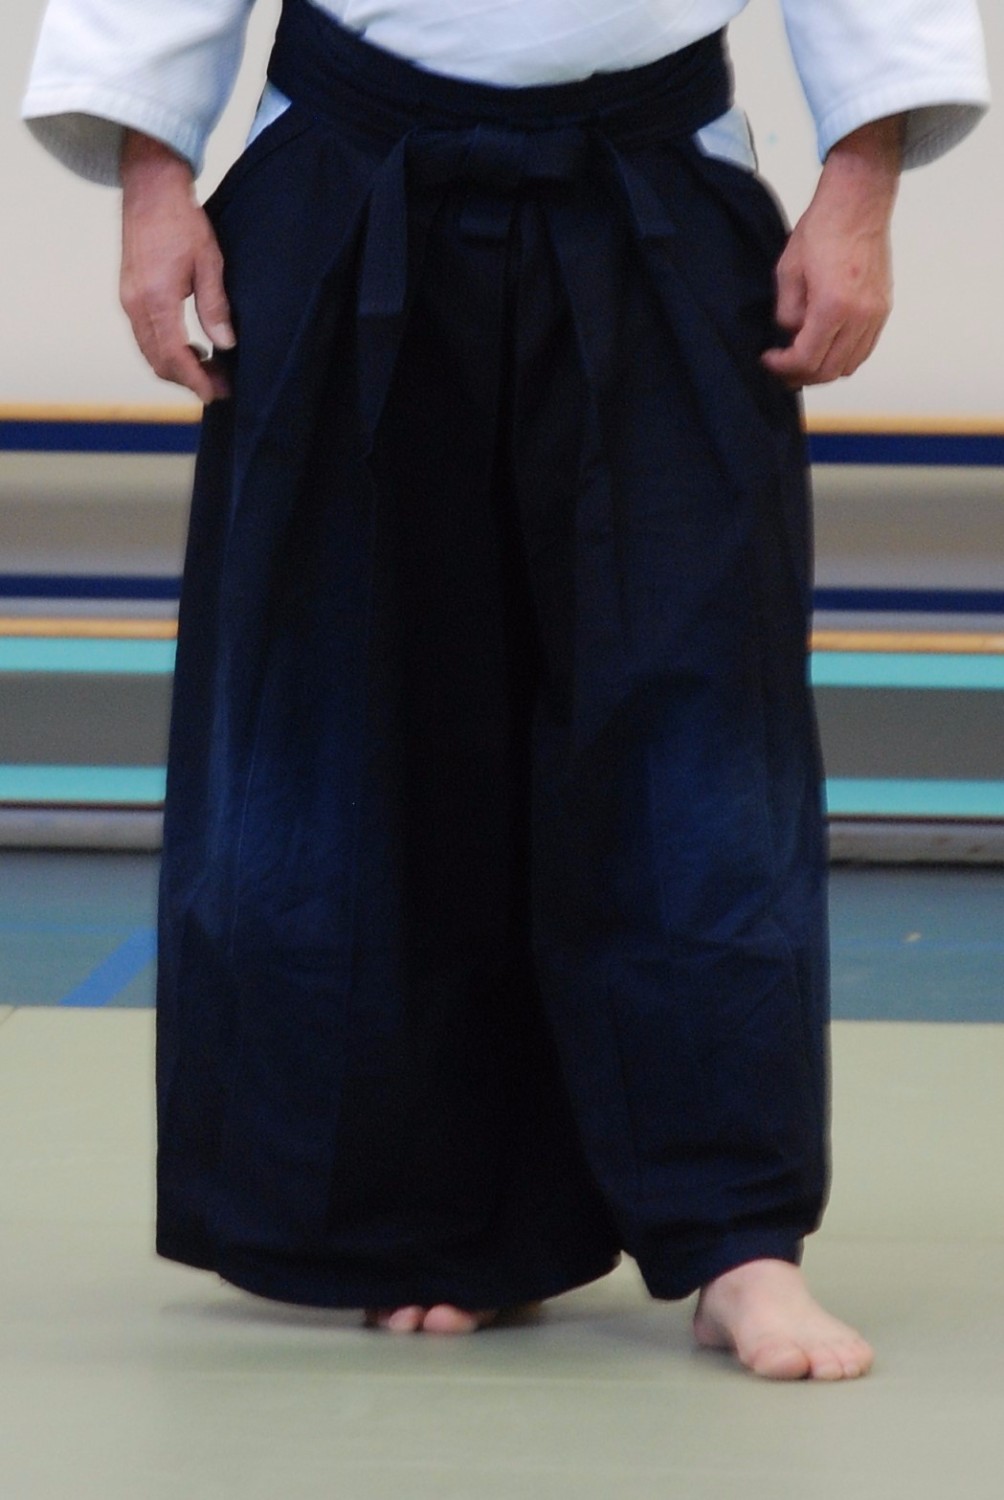 Details about   Kusakura Giapponese Aikido Gi Hakama Pantaloni Gonna Blu Scuro Fatta IN 